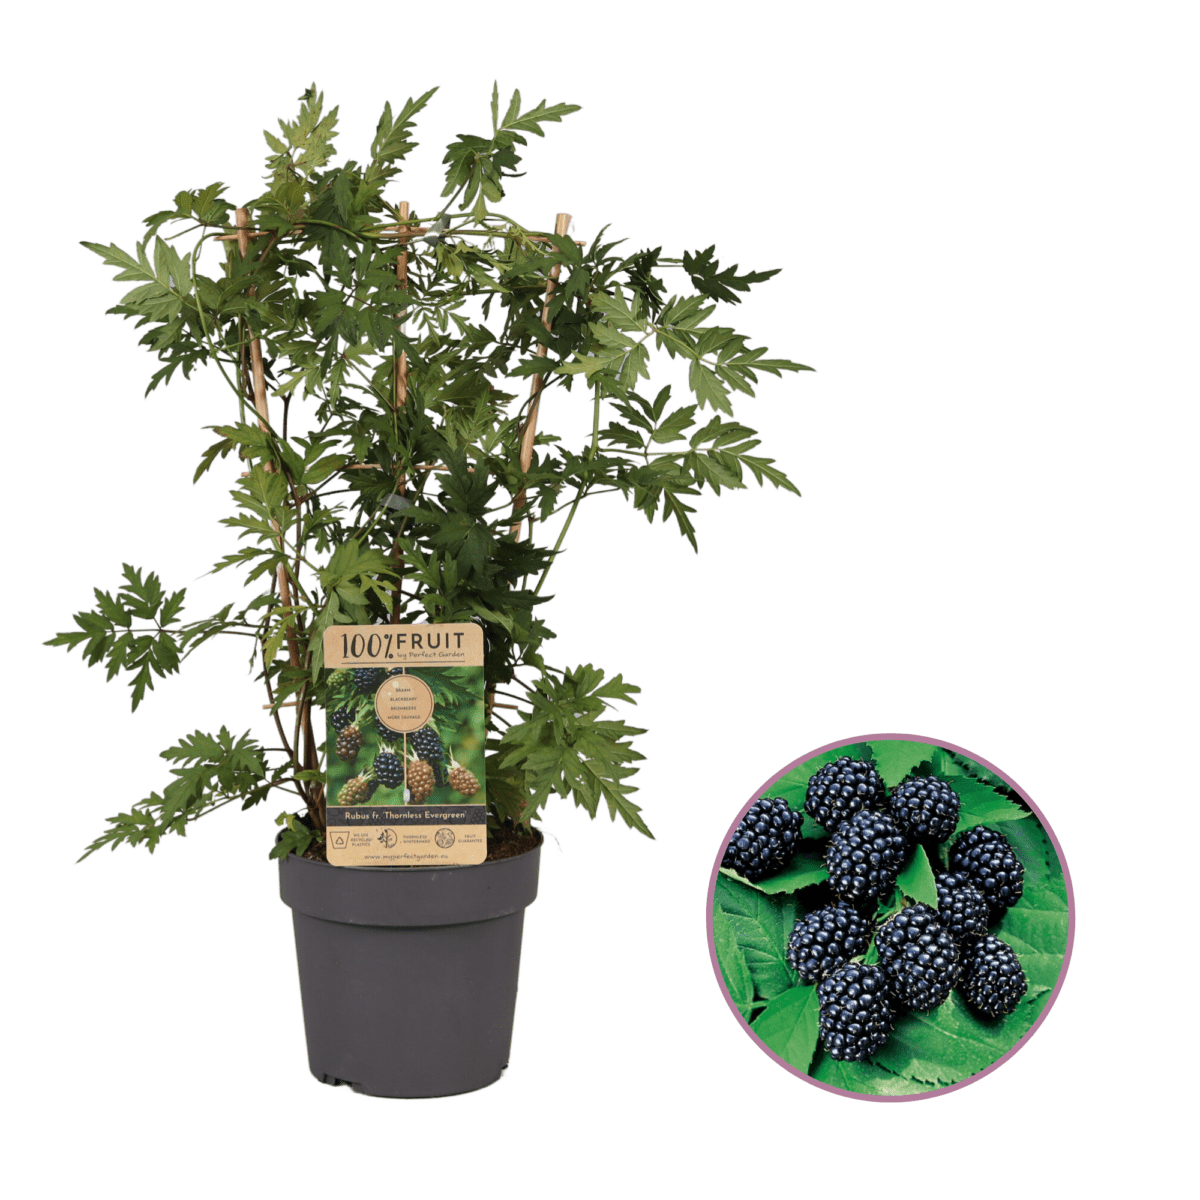 Bramenplant, Rubus fructicosus ‘Thornless Evergreen’ P21